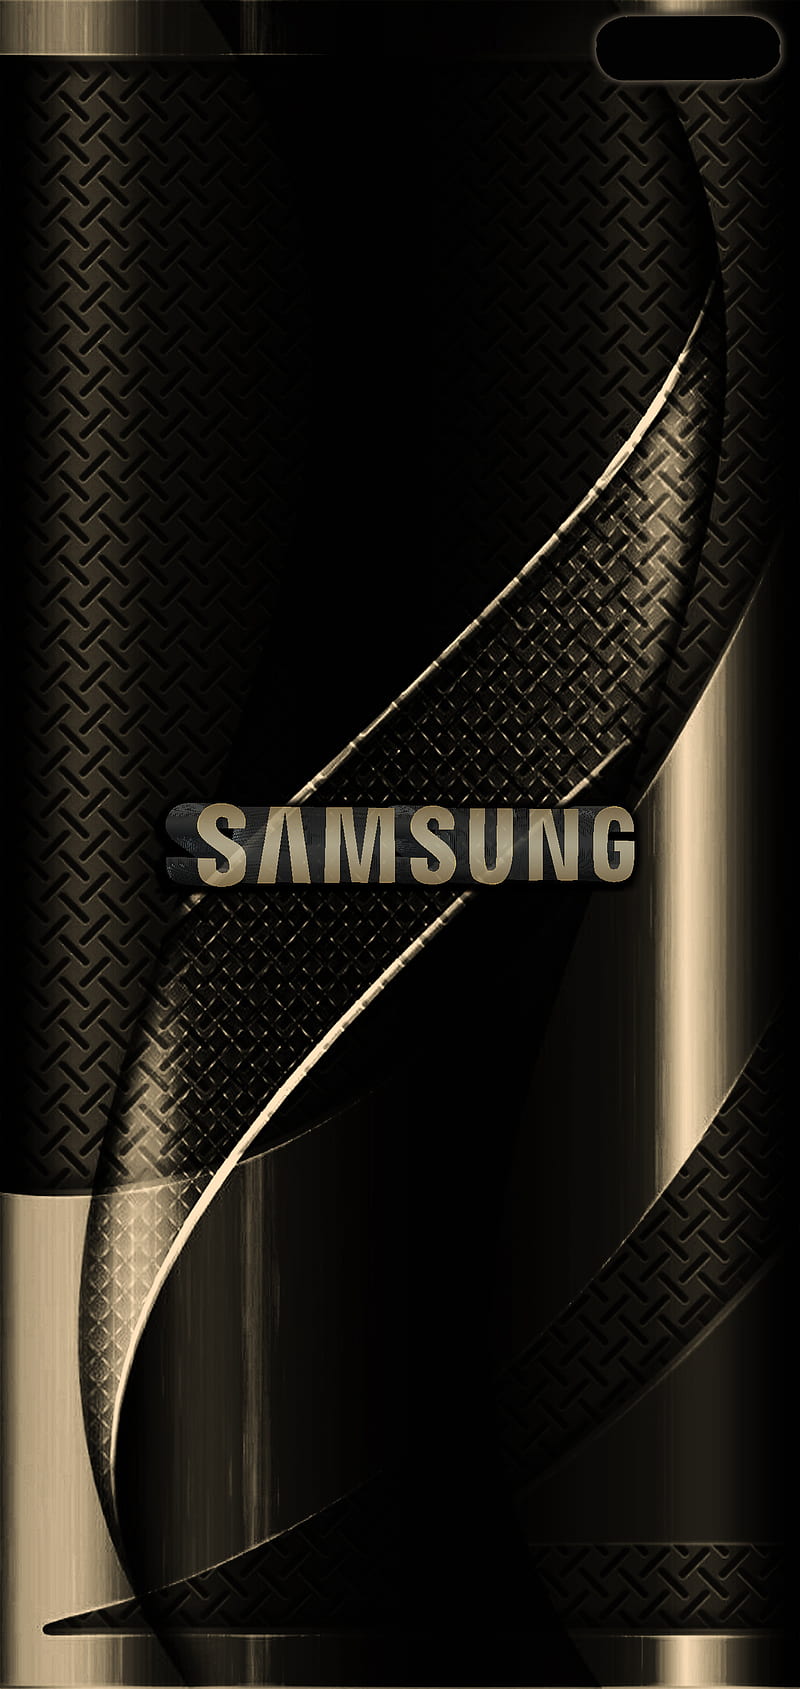 Wallpapers 3d Hd Samsung Image Num 64